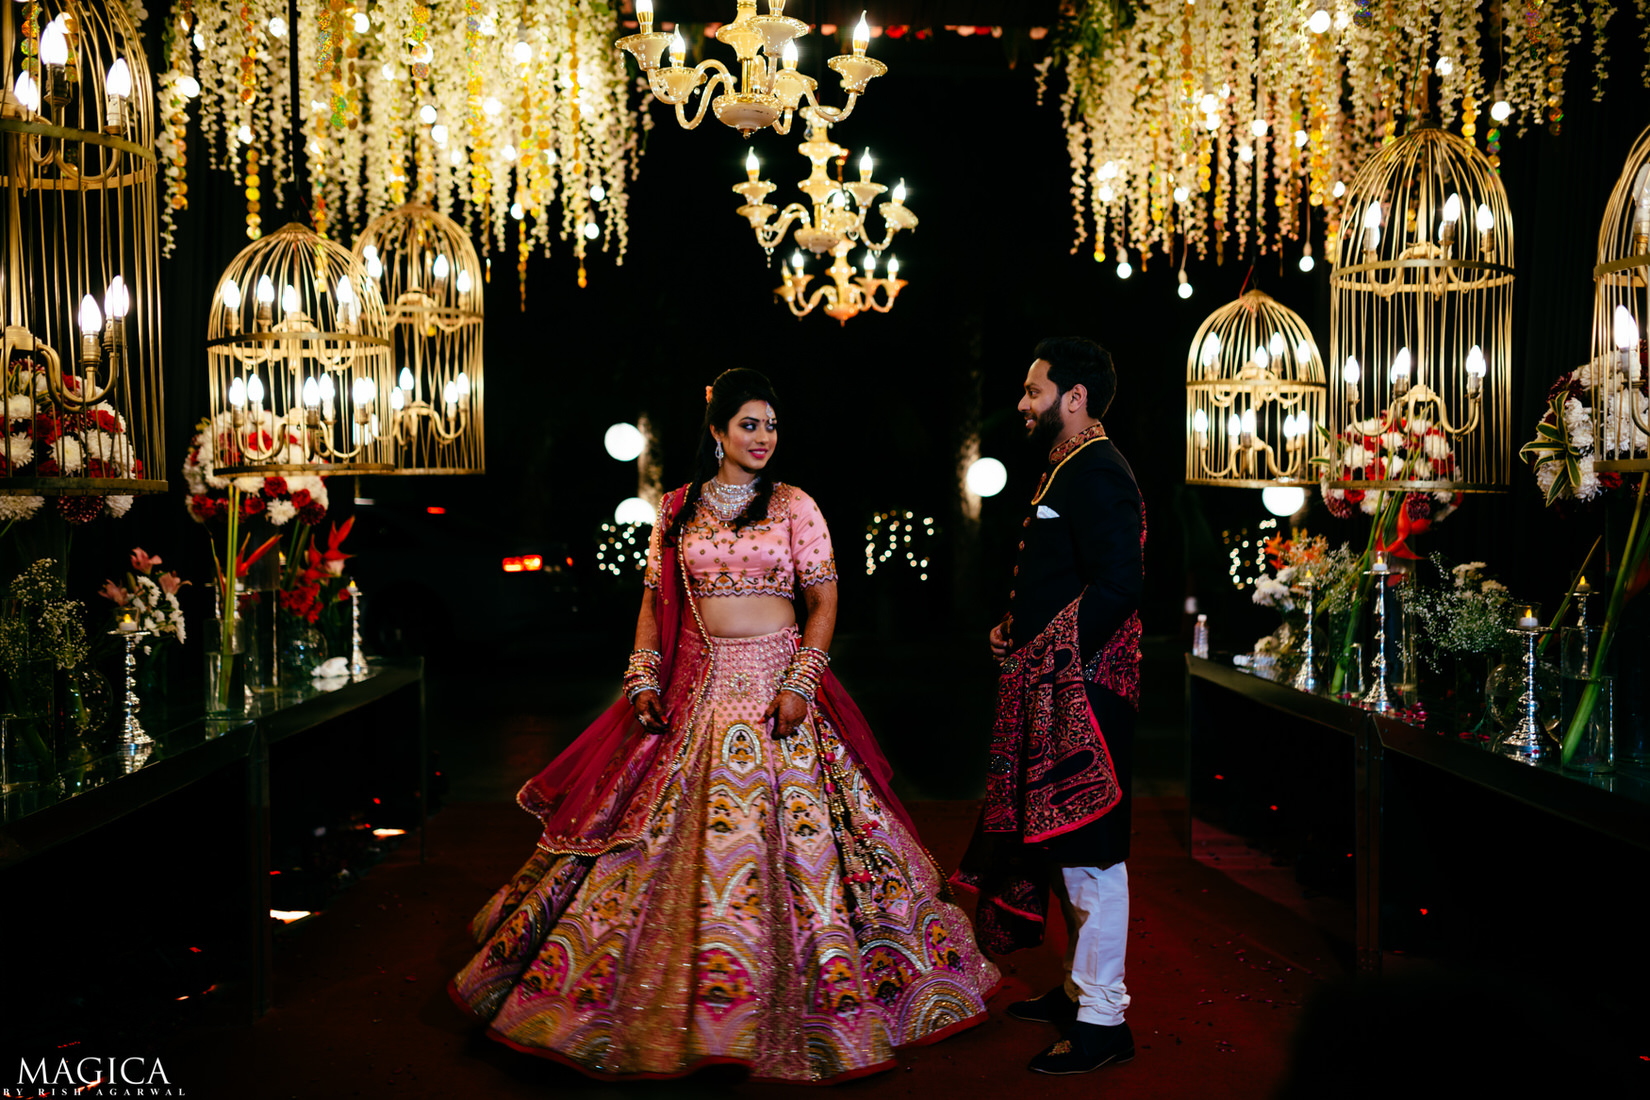 Best Indian Candid Wedding Photographer in New Delhi